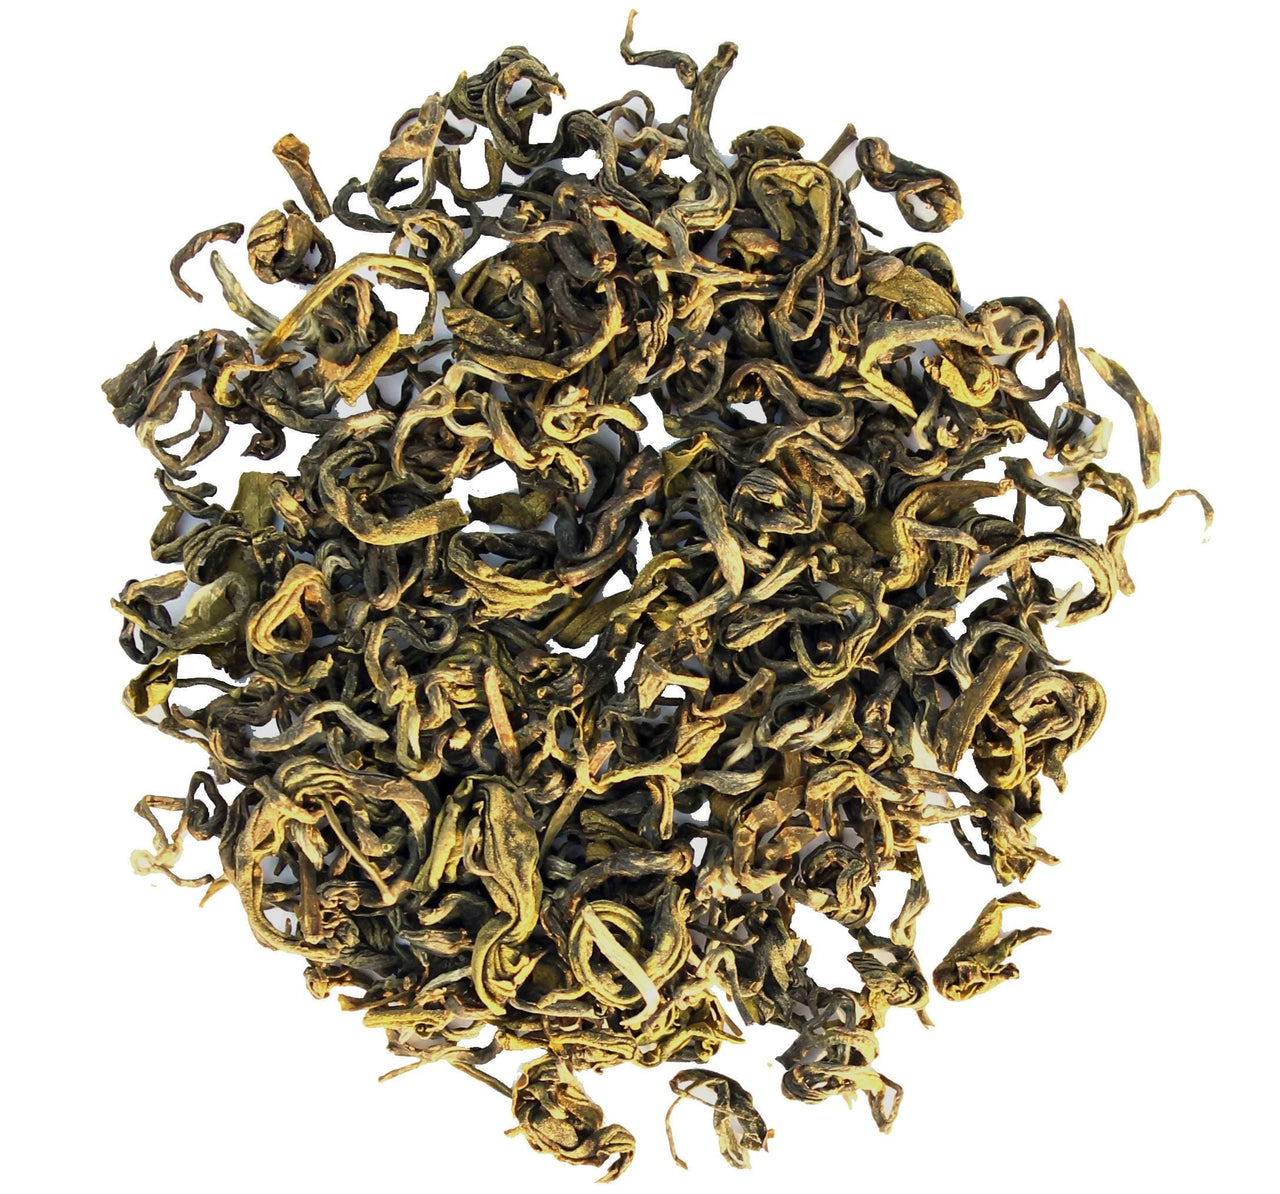 The Tea Trove - Green Tea